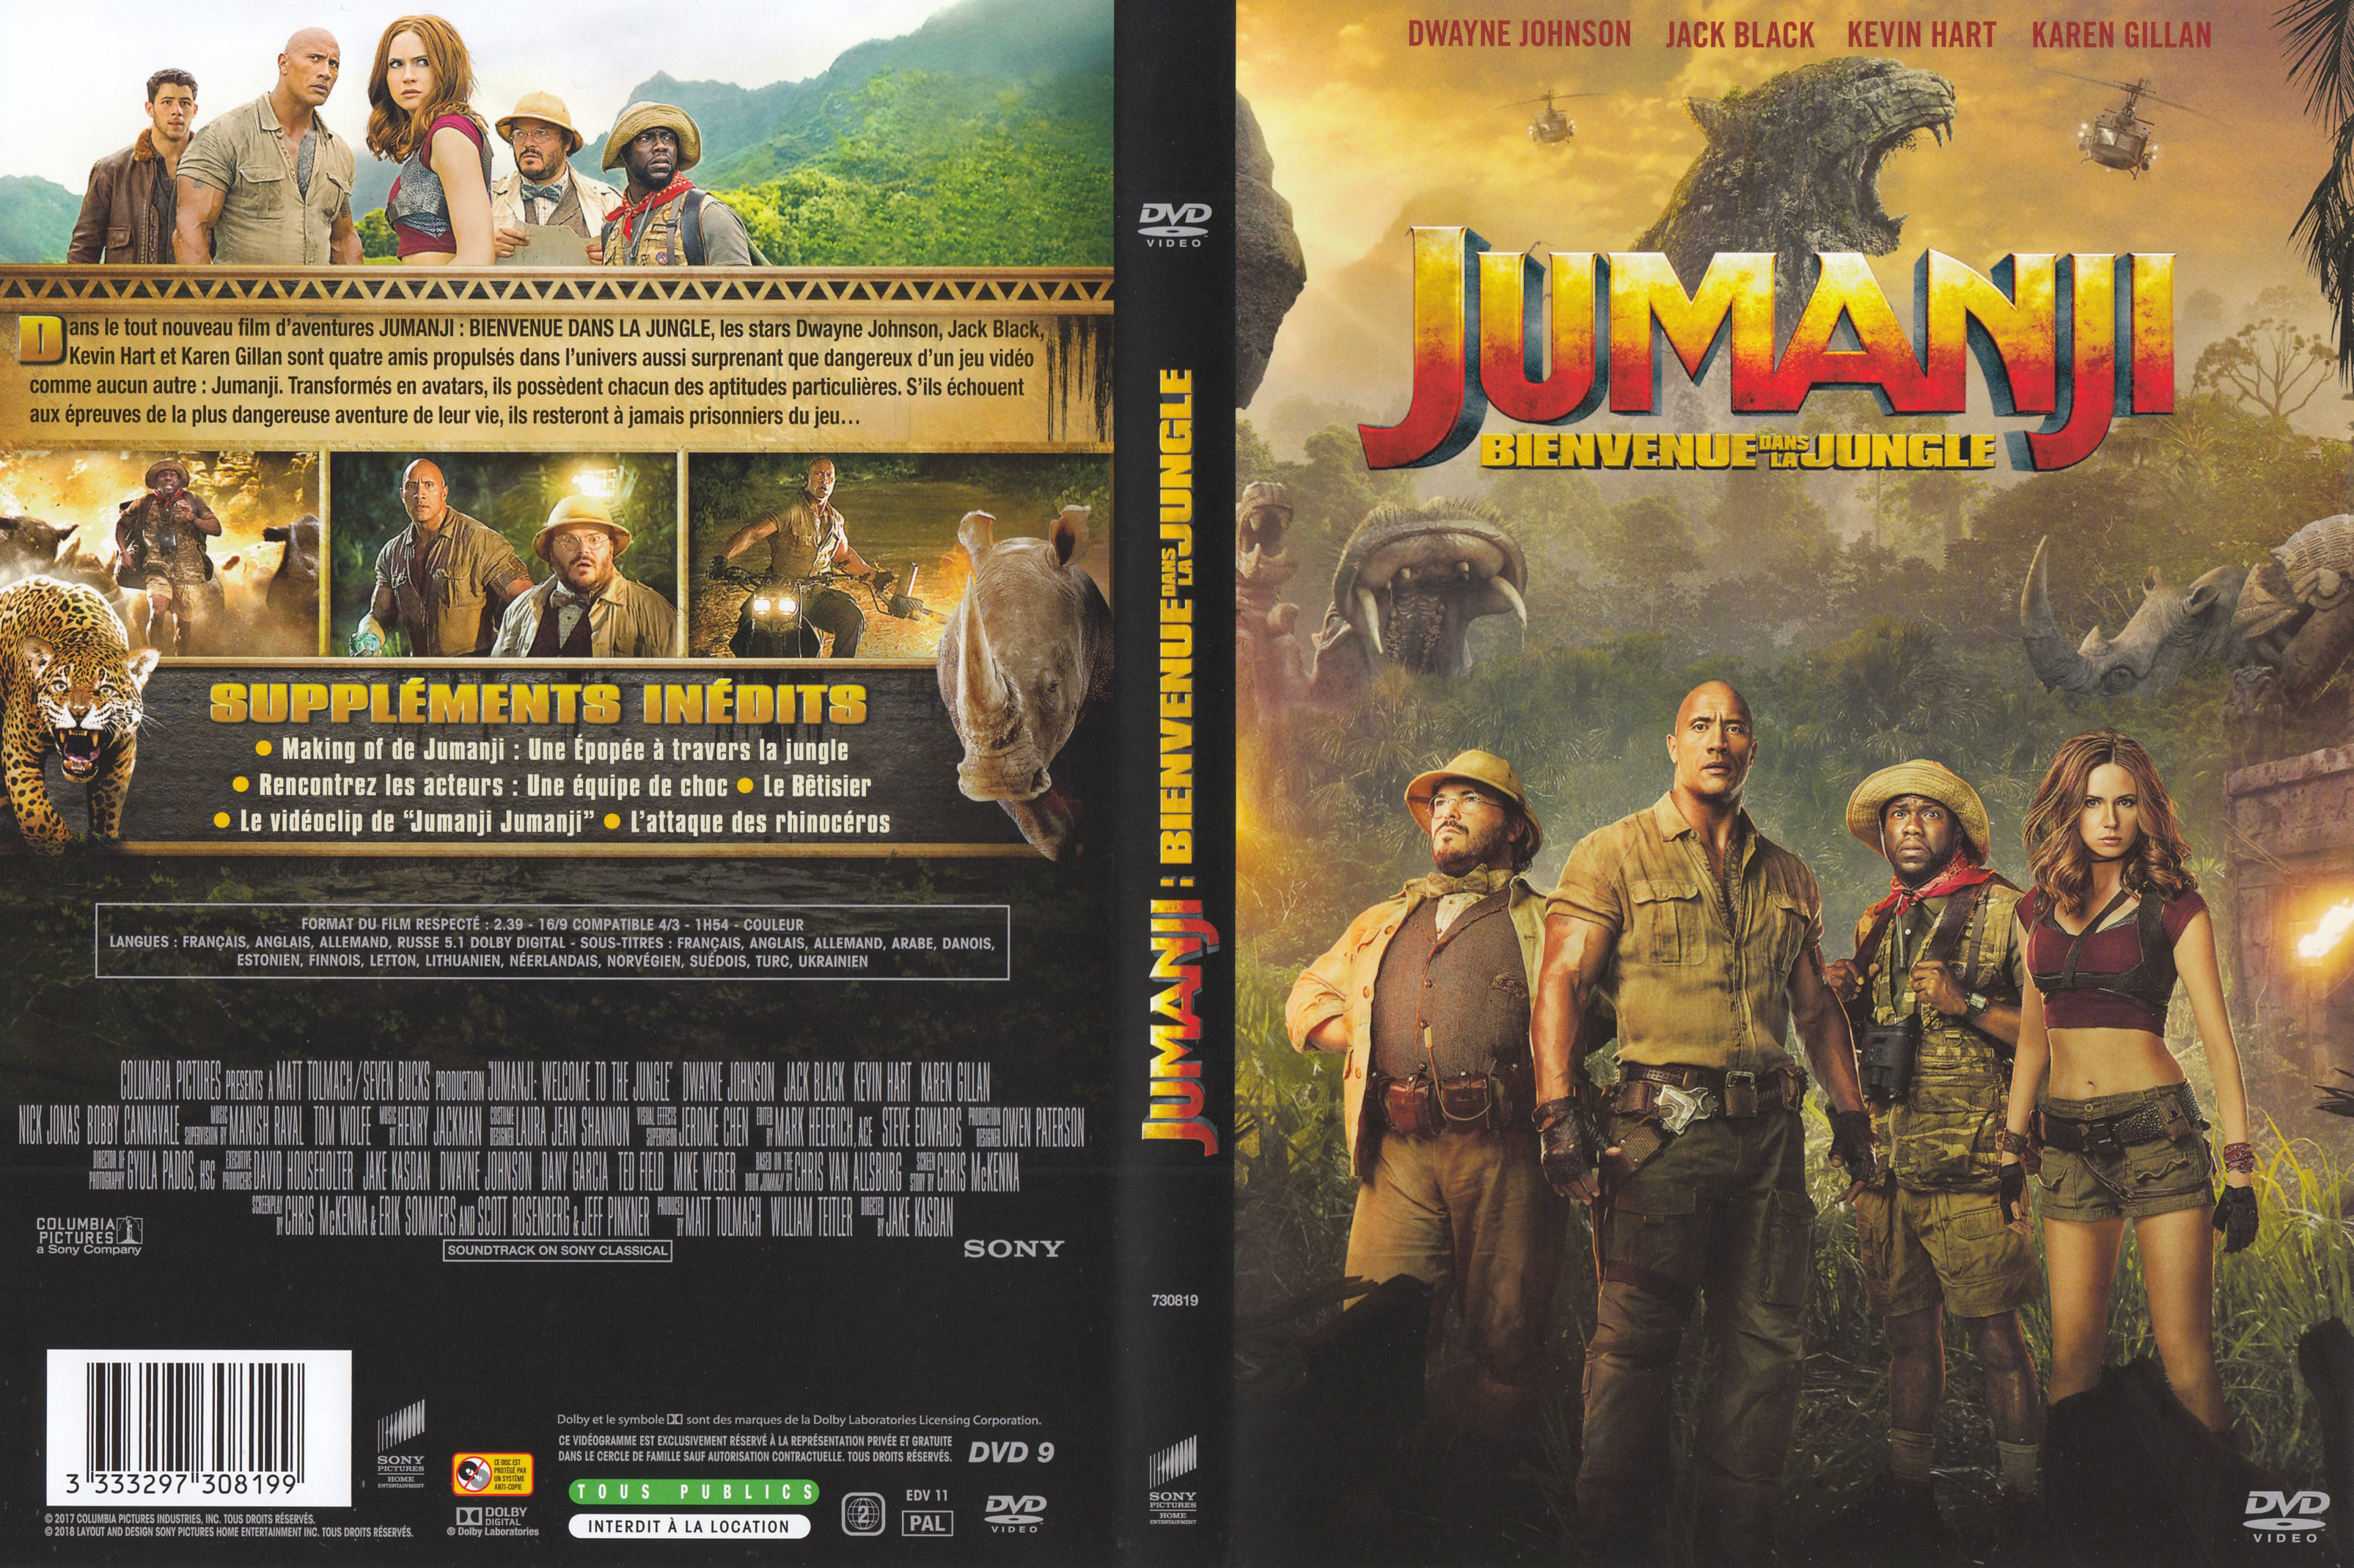 Jaquette DVD Jumanji Bienvenue dans la jungle